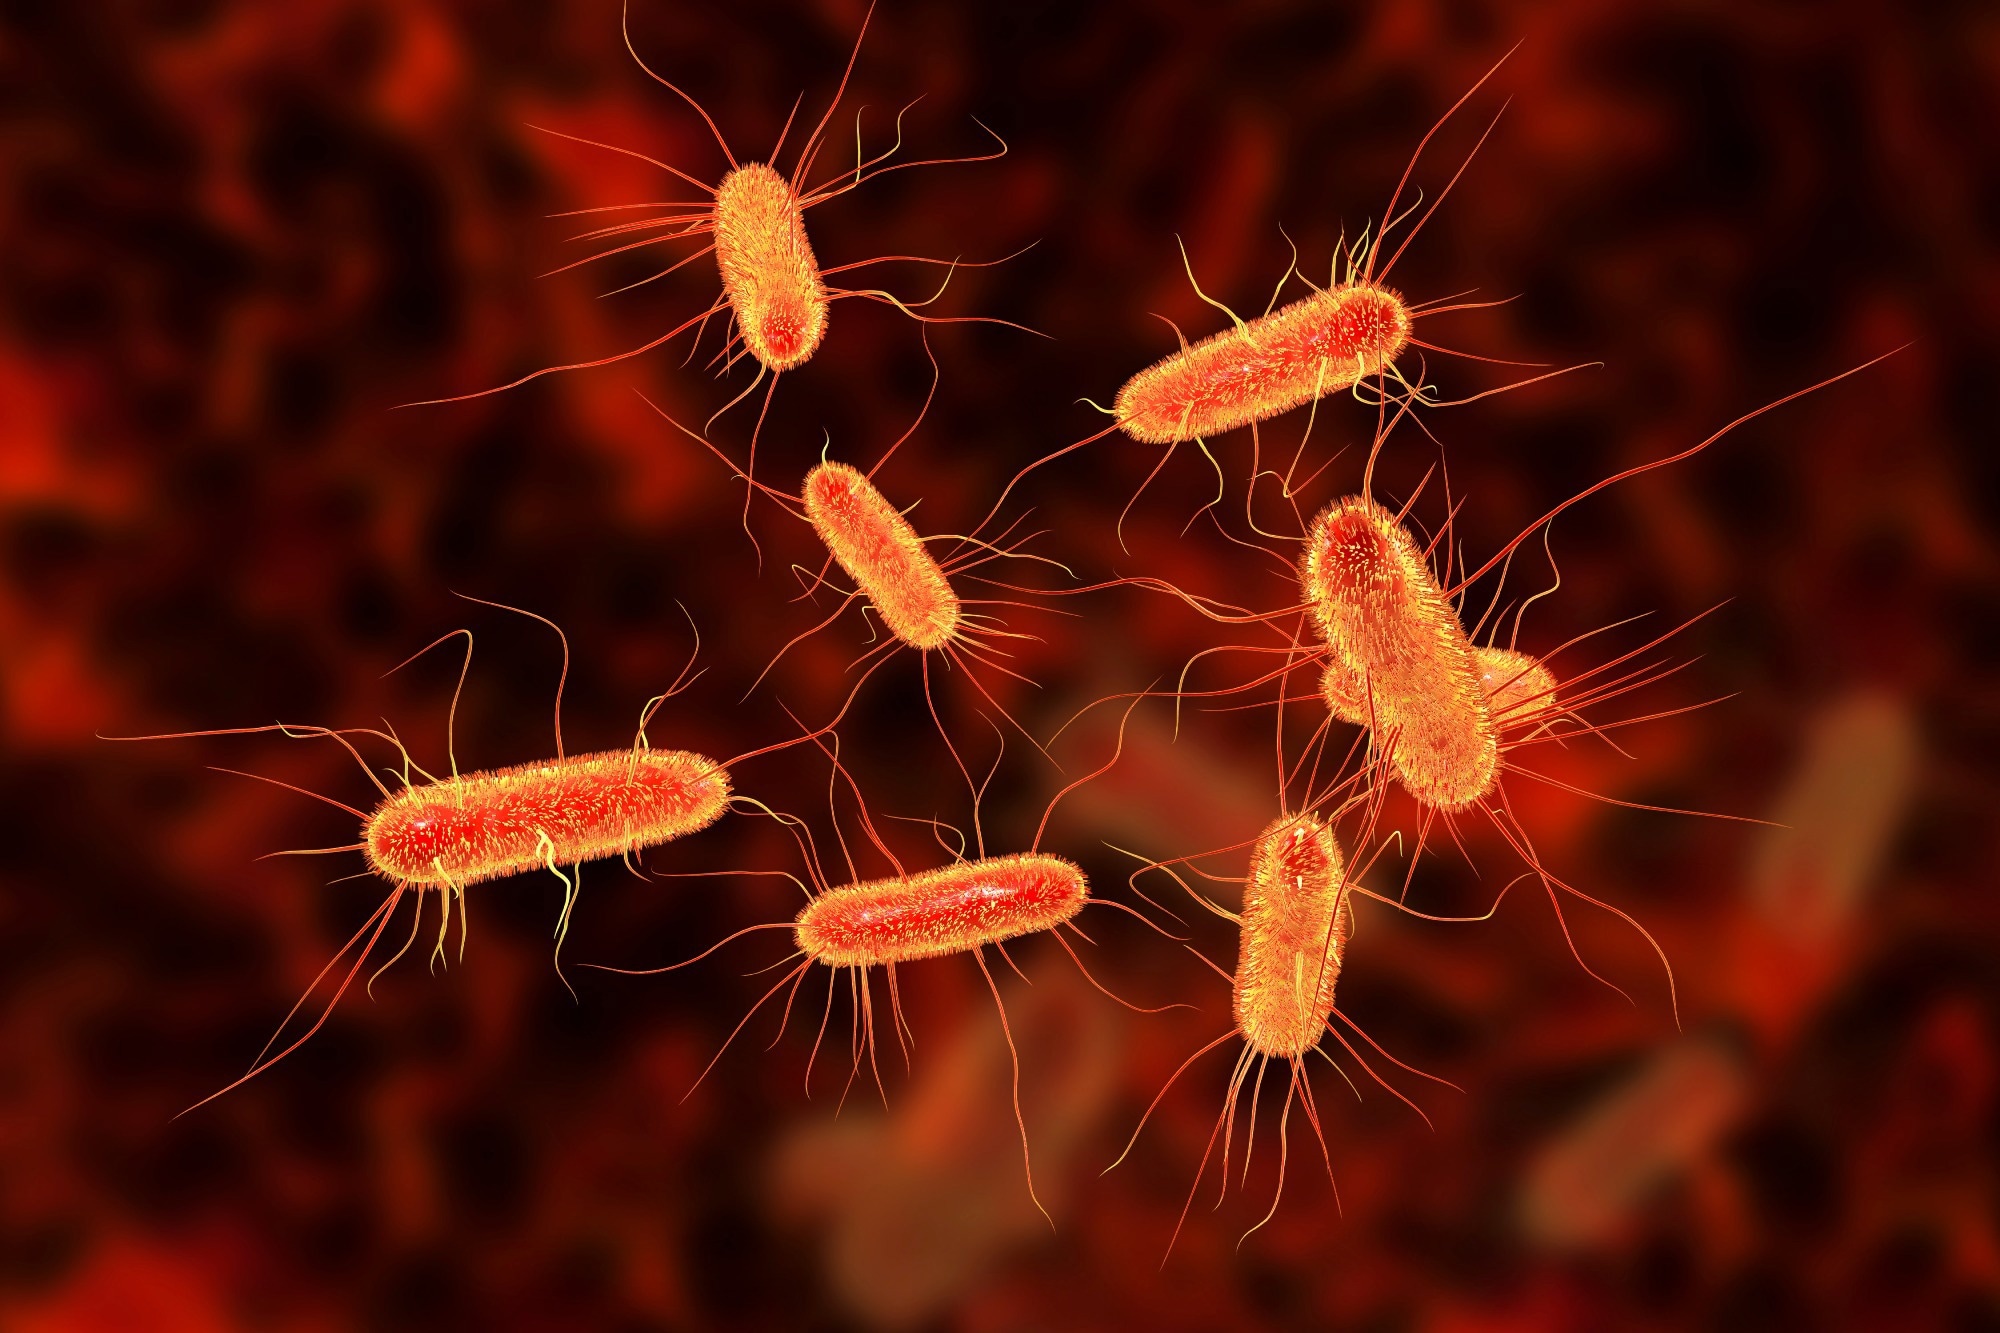 Rapid spread of antibiotic-resistant E. coli across Europe raises concerns